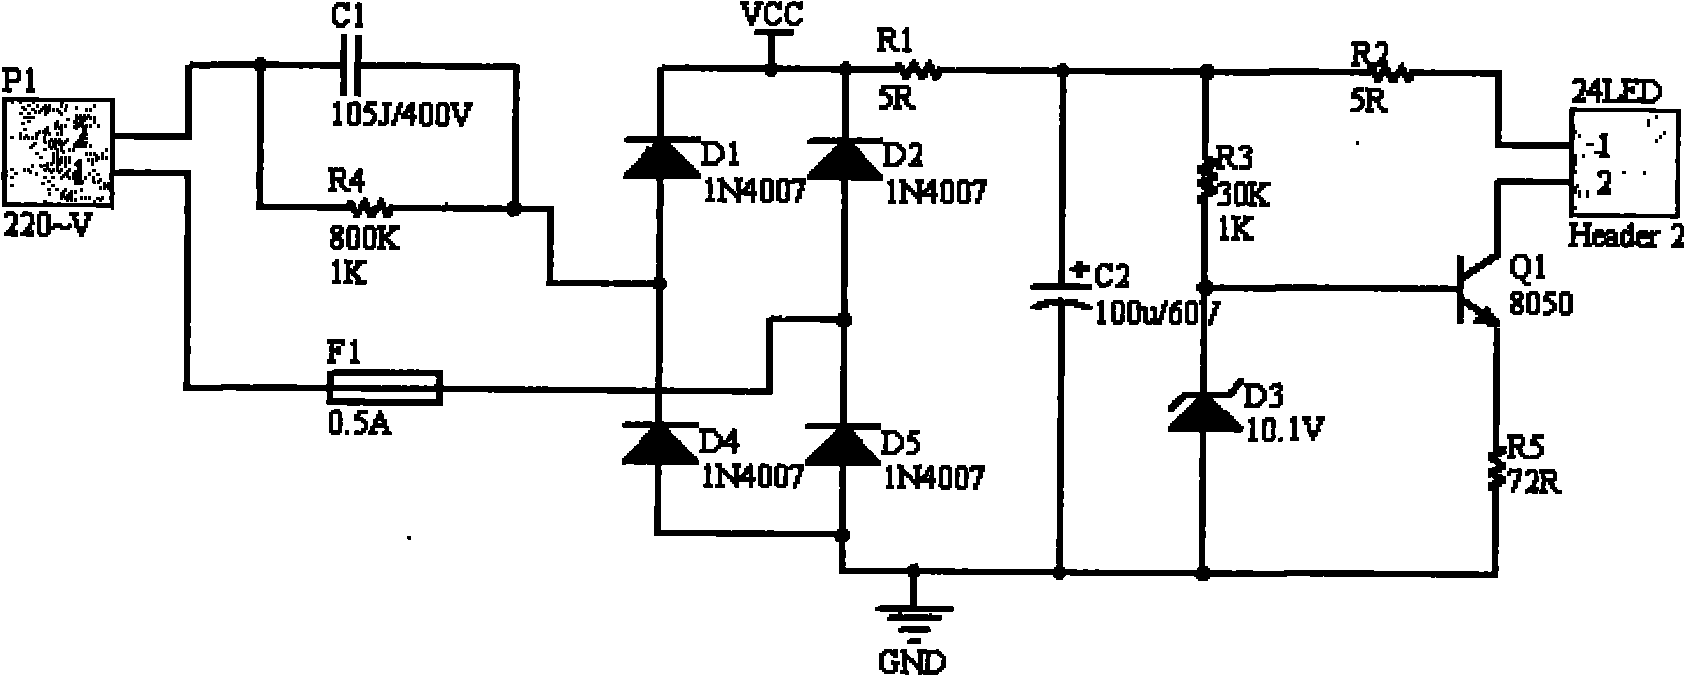 LED (light-emitting diode) lighting circuit